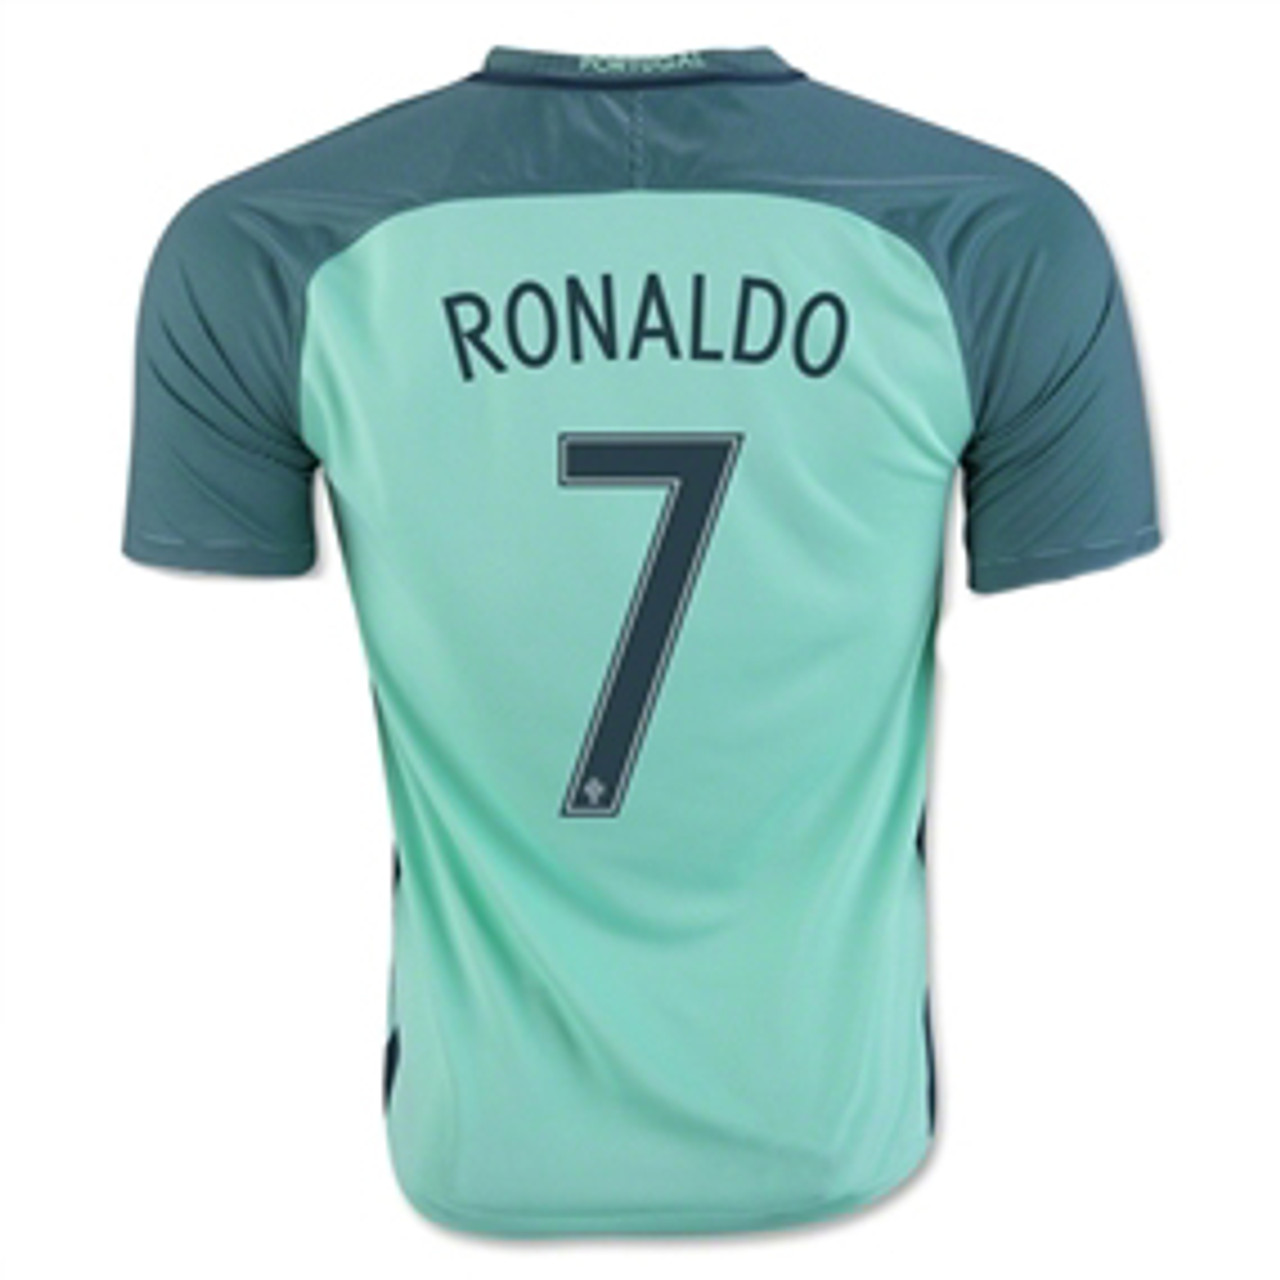 nike ronaldo shirt